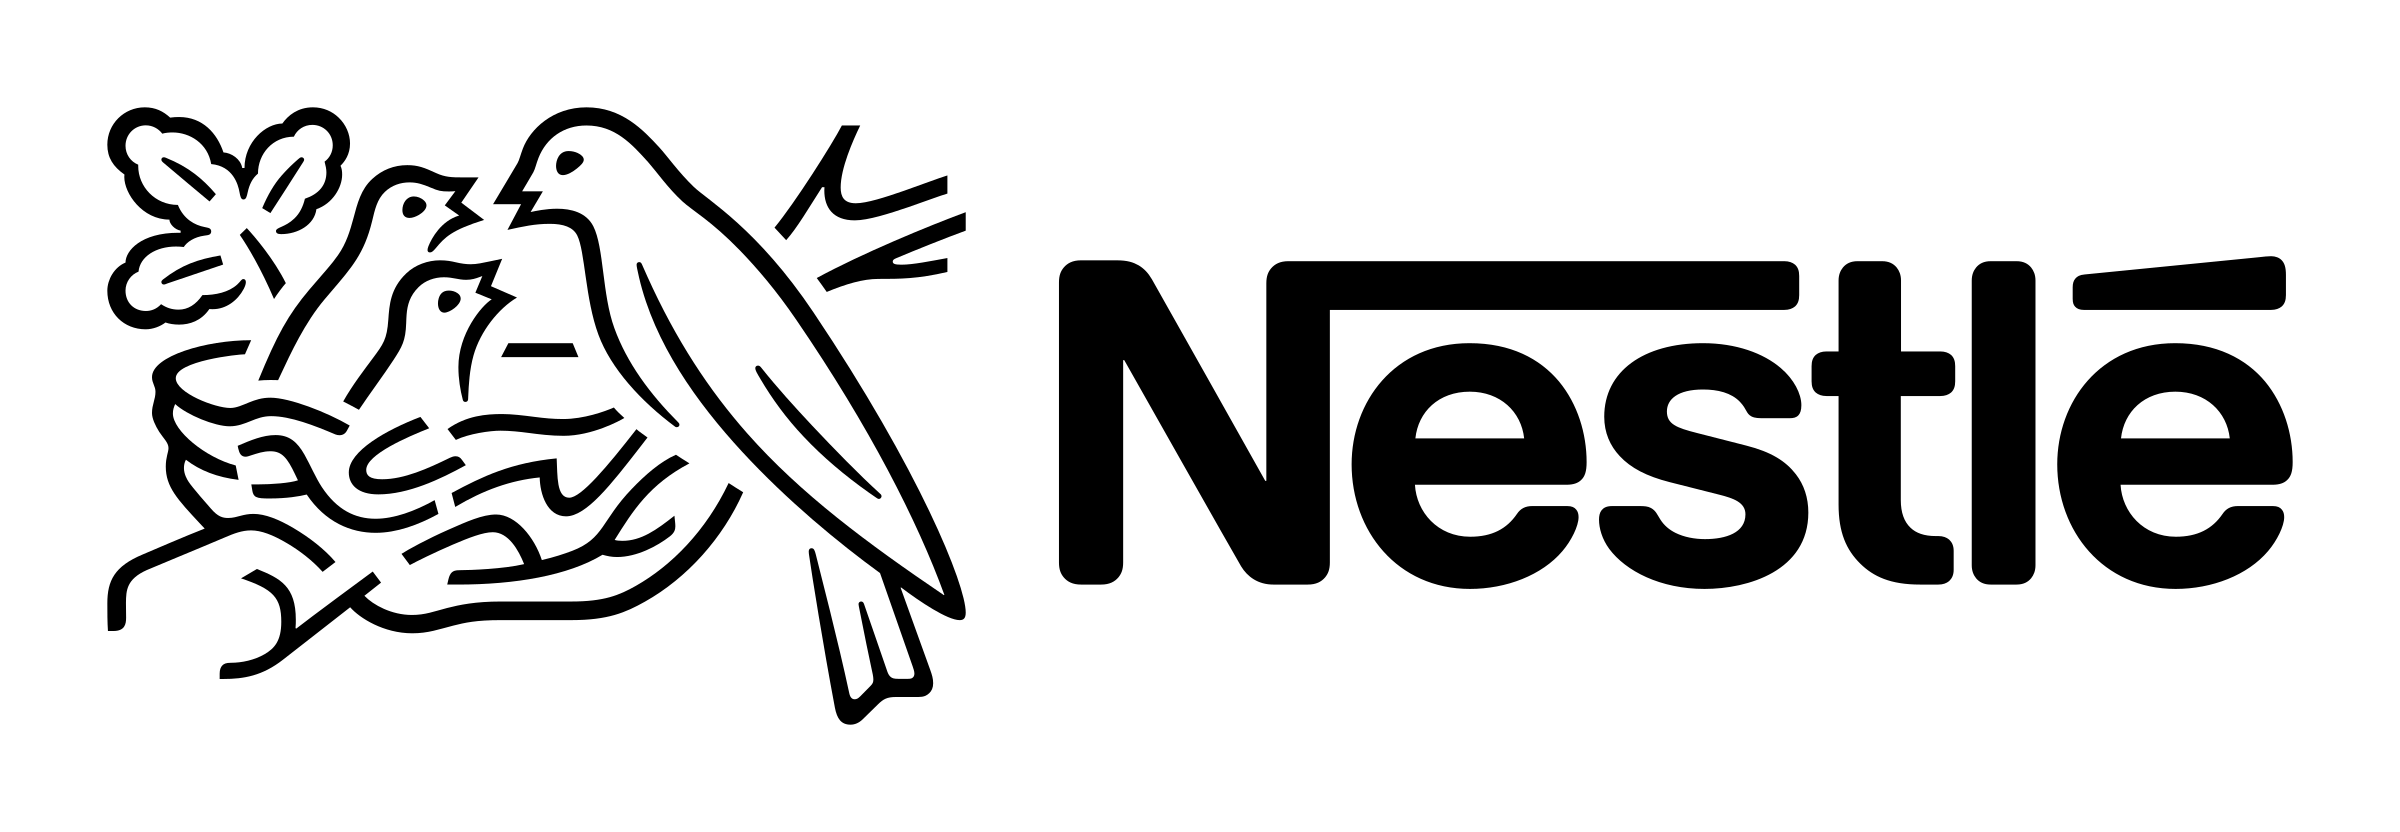 nestle-logo-black-and-white.png